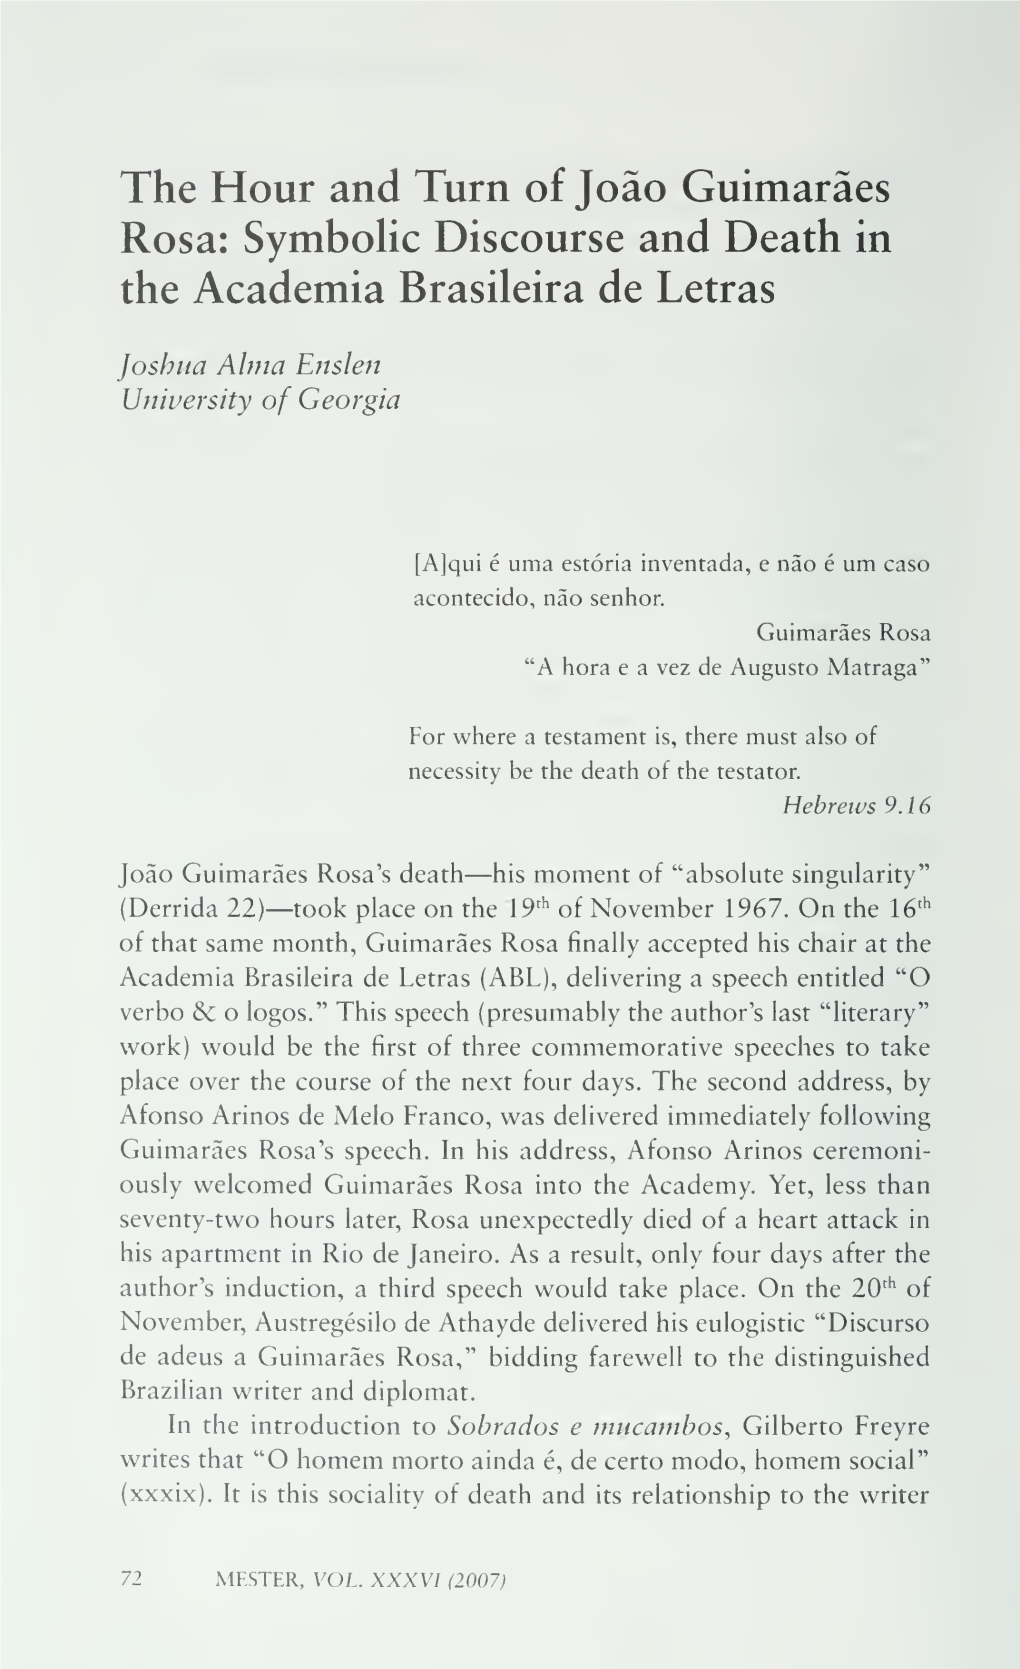 The Hour and Turn of João Guimarães Rosa: Symbolic Discourse and Death in the Academia Brasileira De Letras